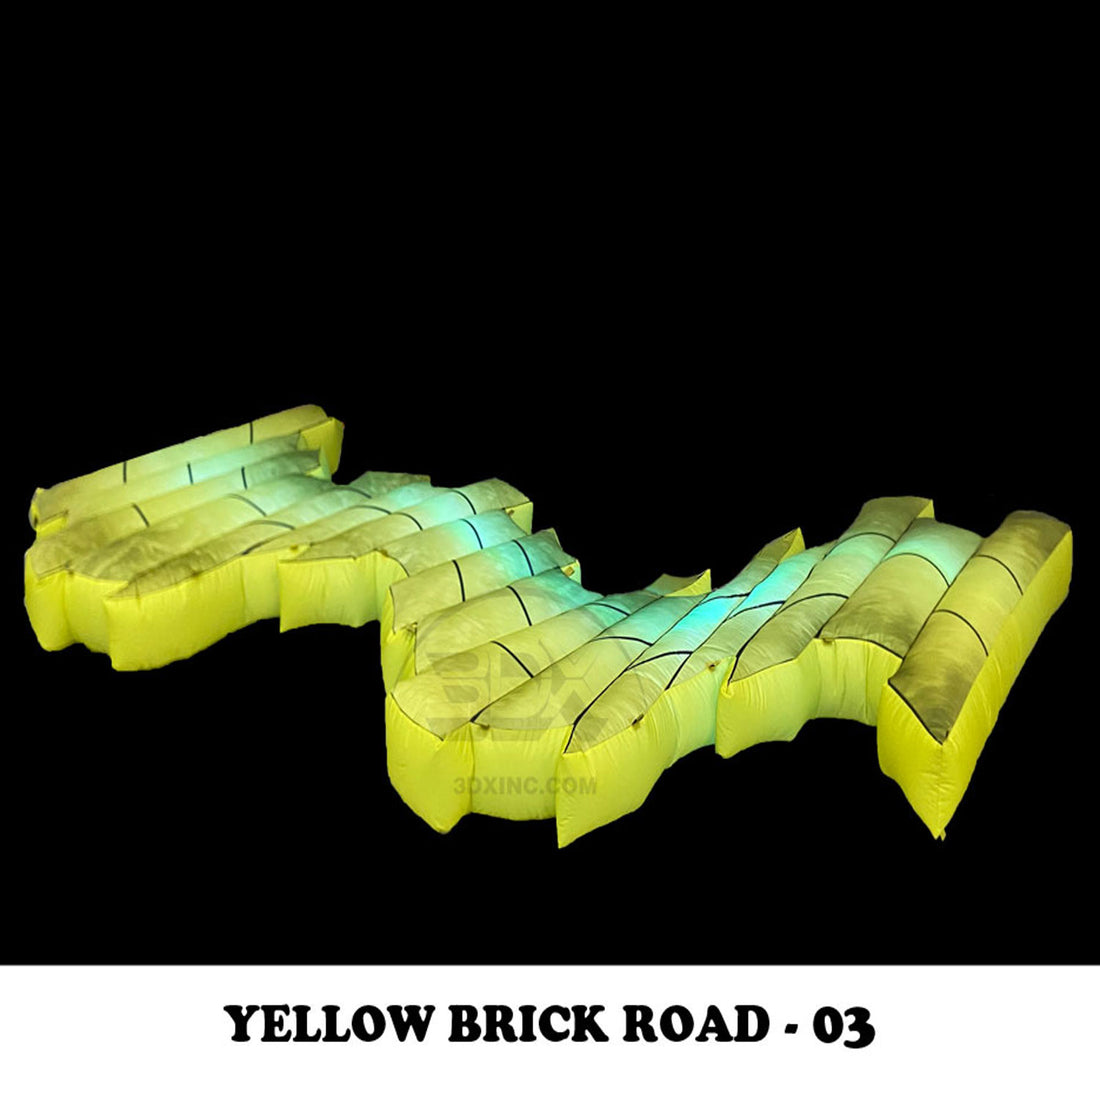 YELLOW BRICK ROAD - 03